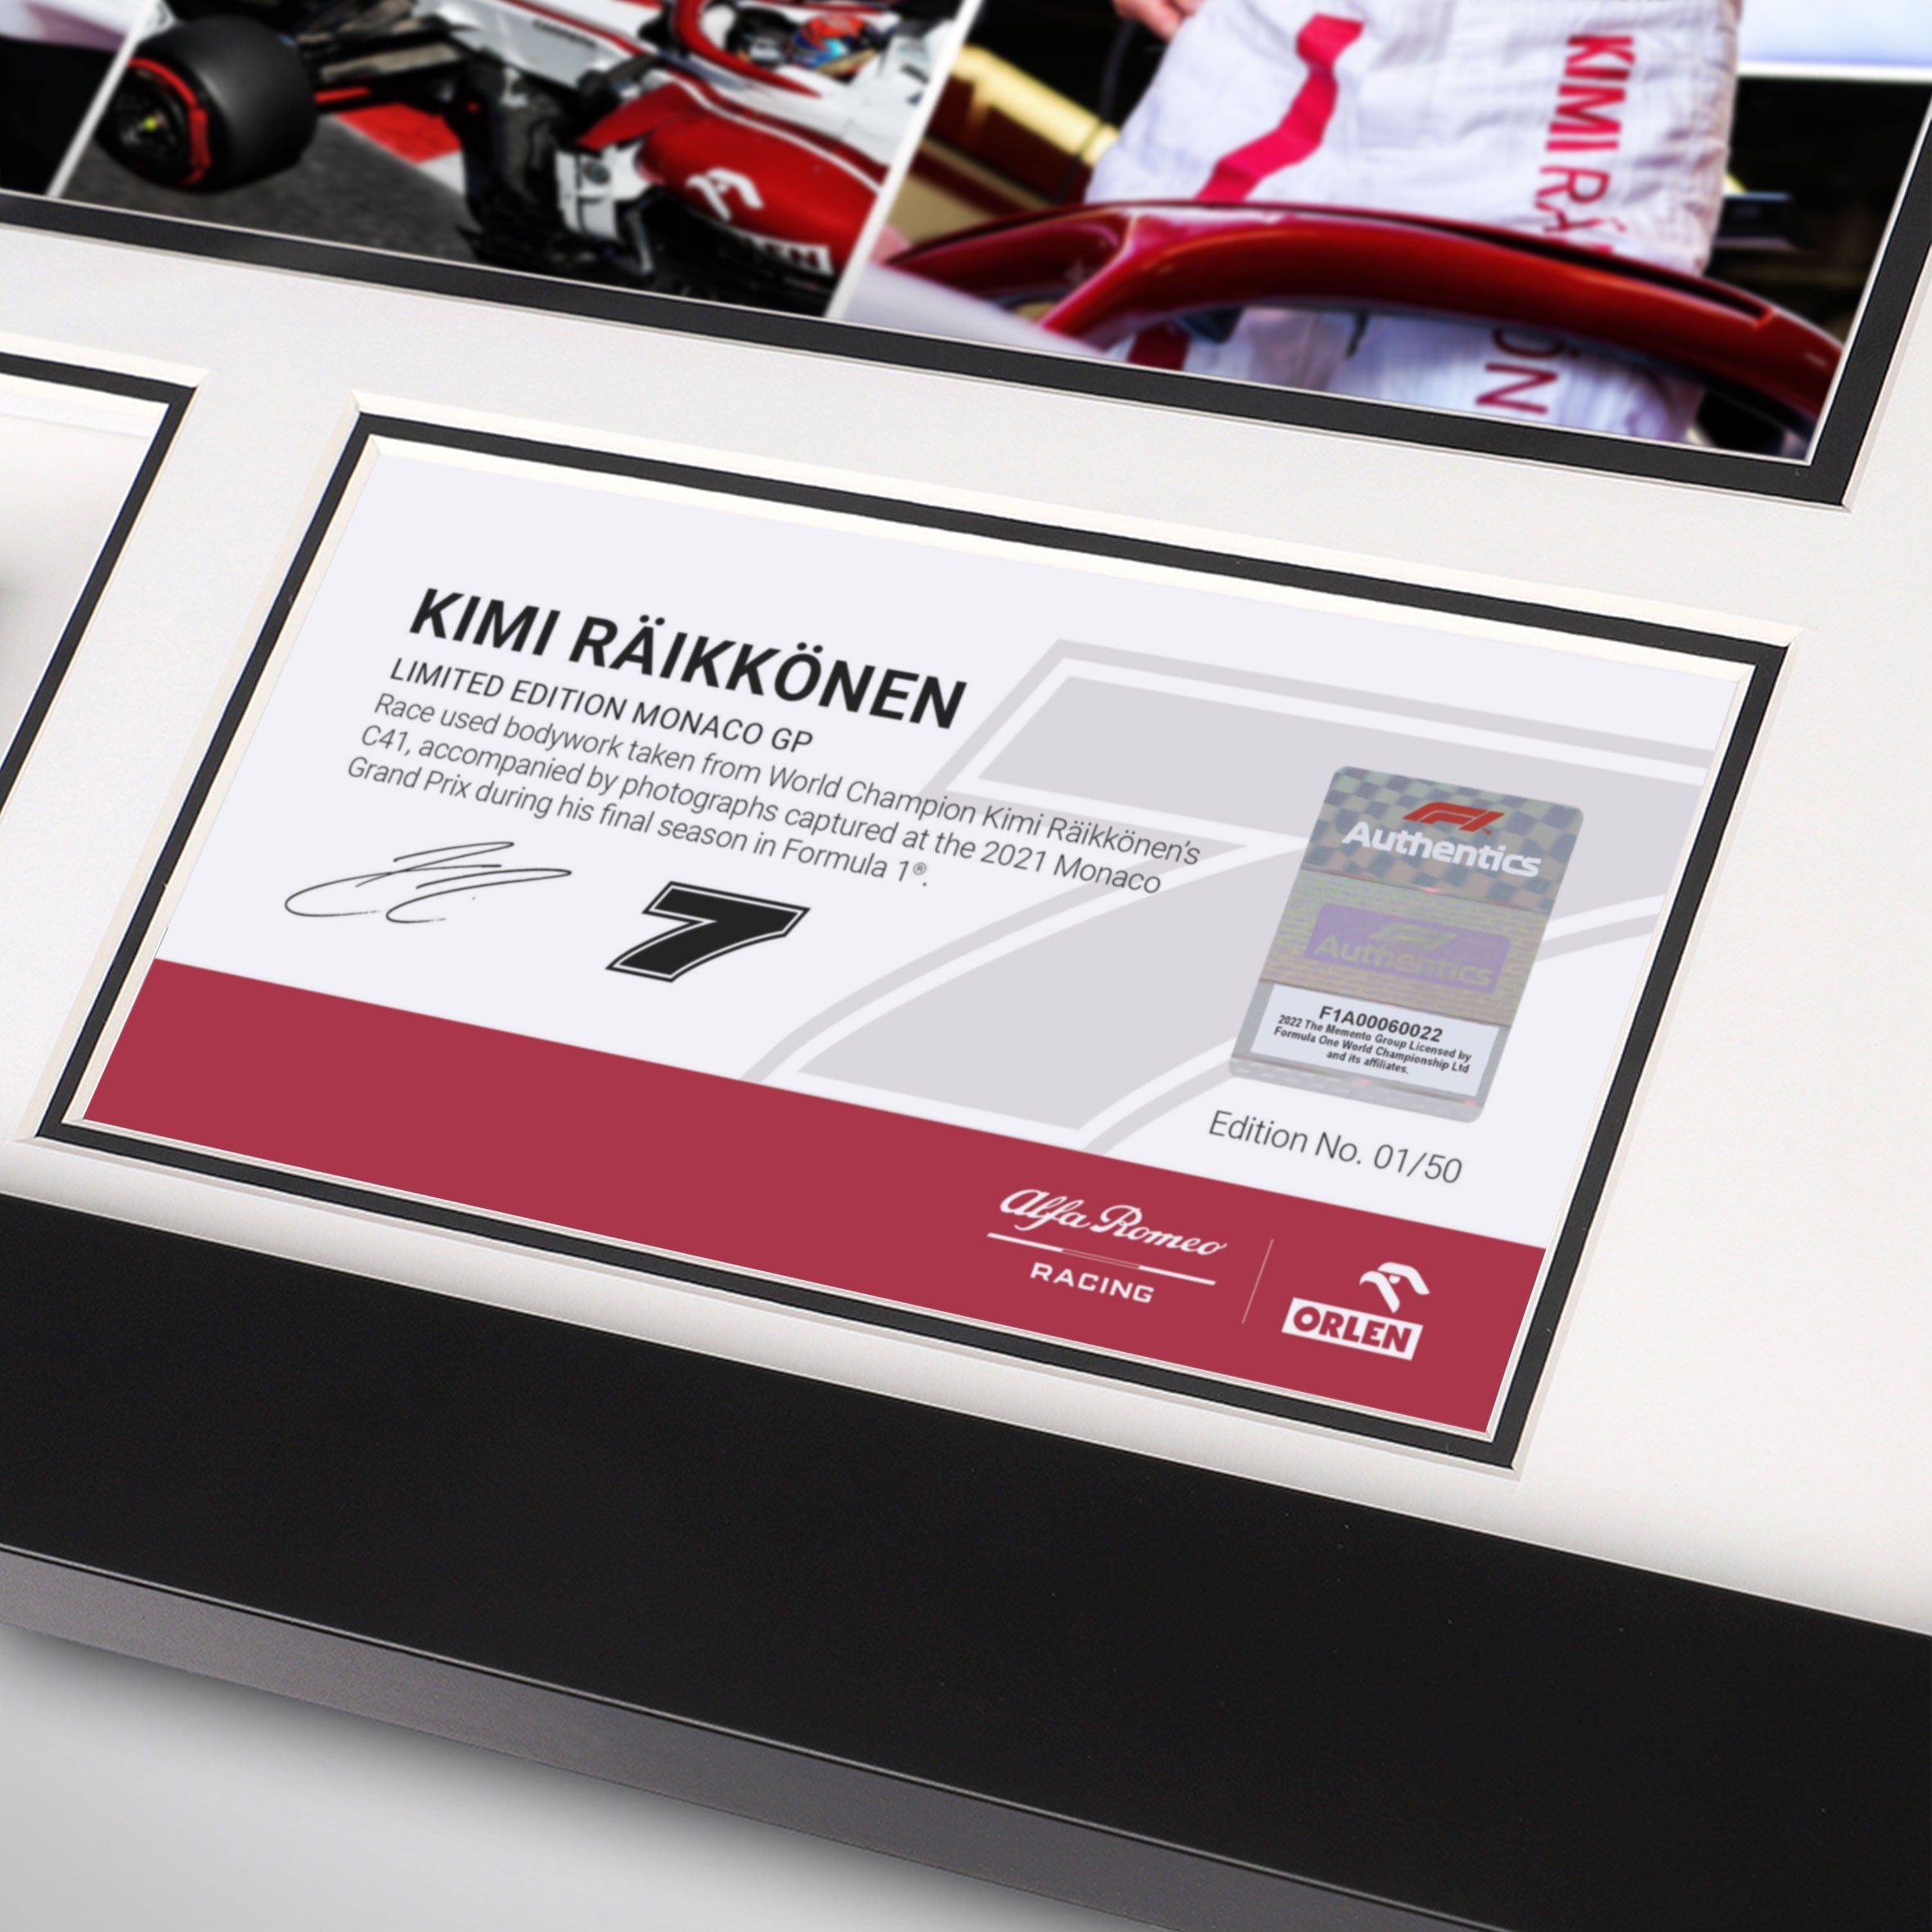 Limited-Edition Kimi Räikkönen 2021 Bodywork & Photos - Monaco GP